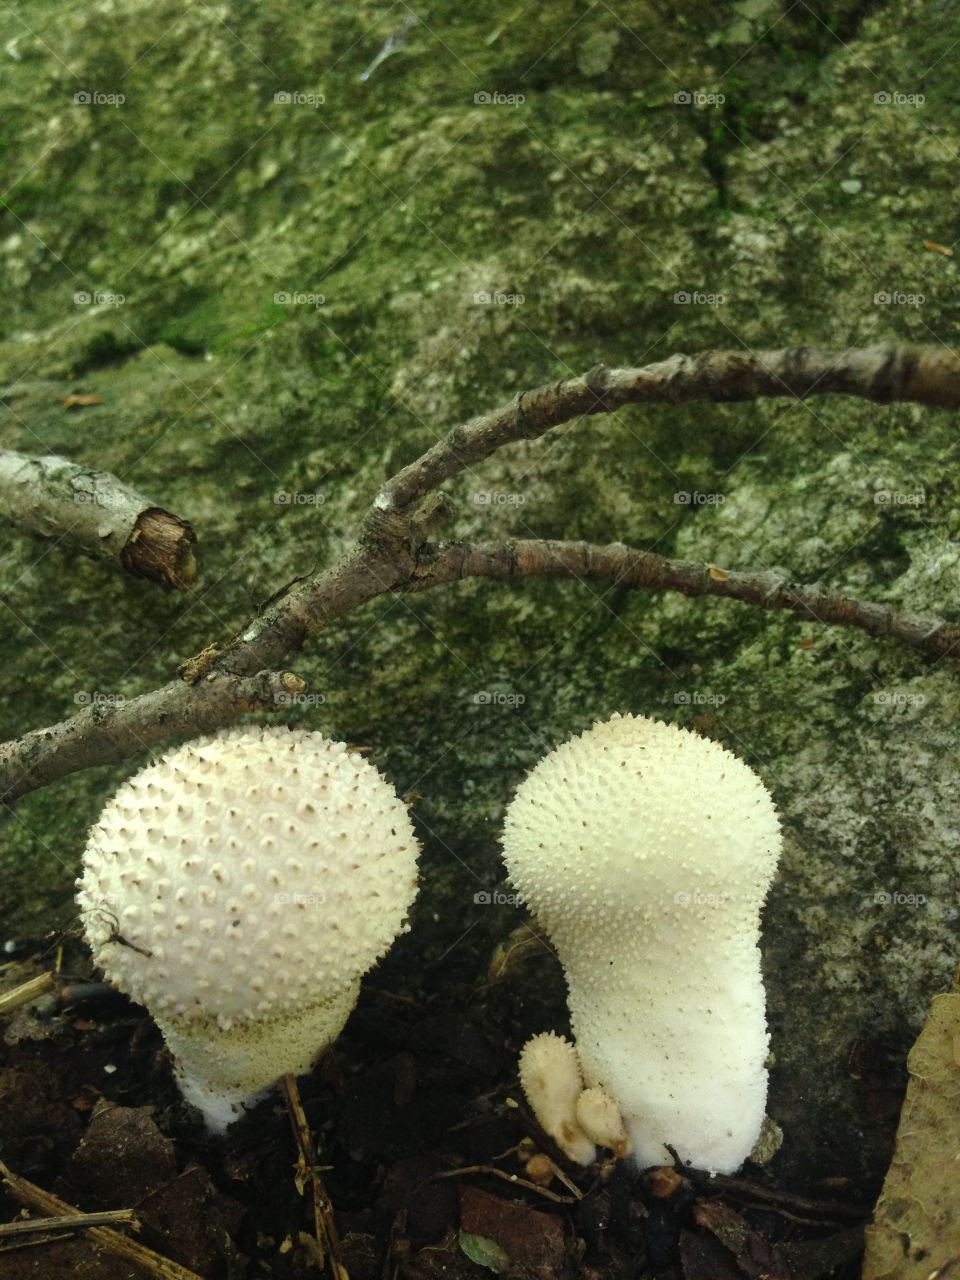 Puffy fungus among us